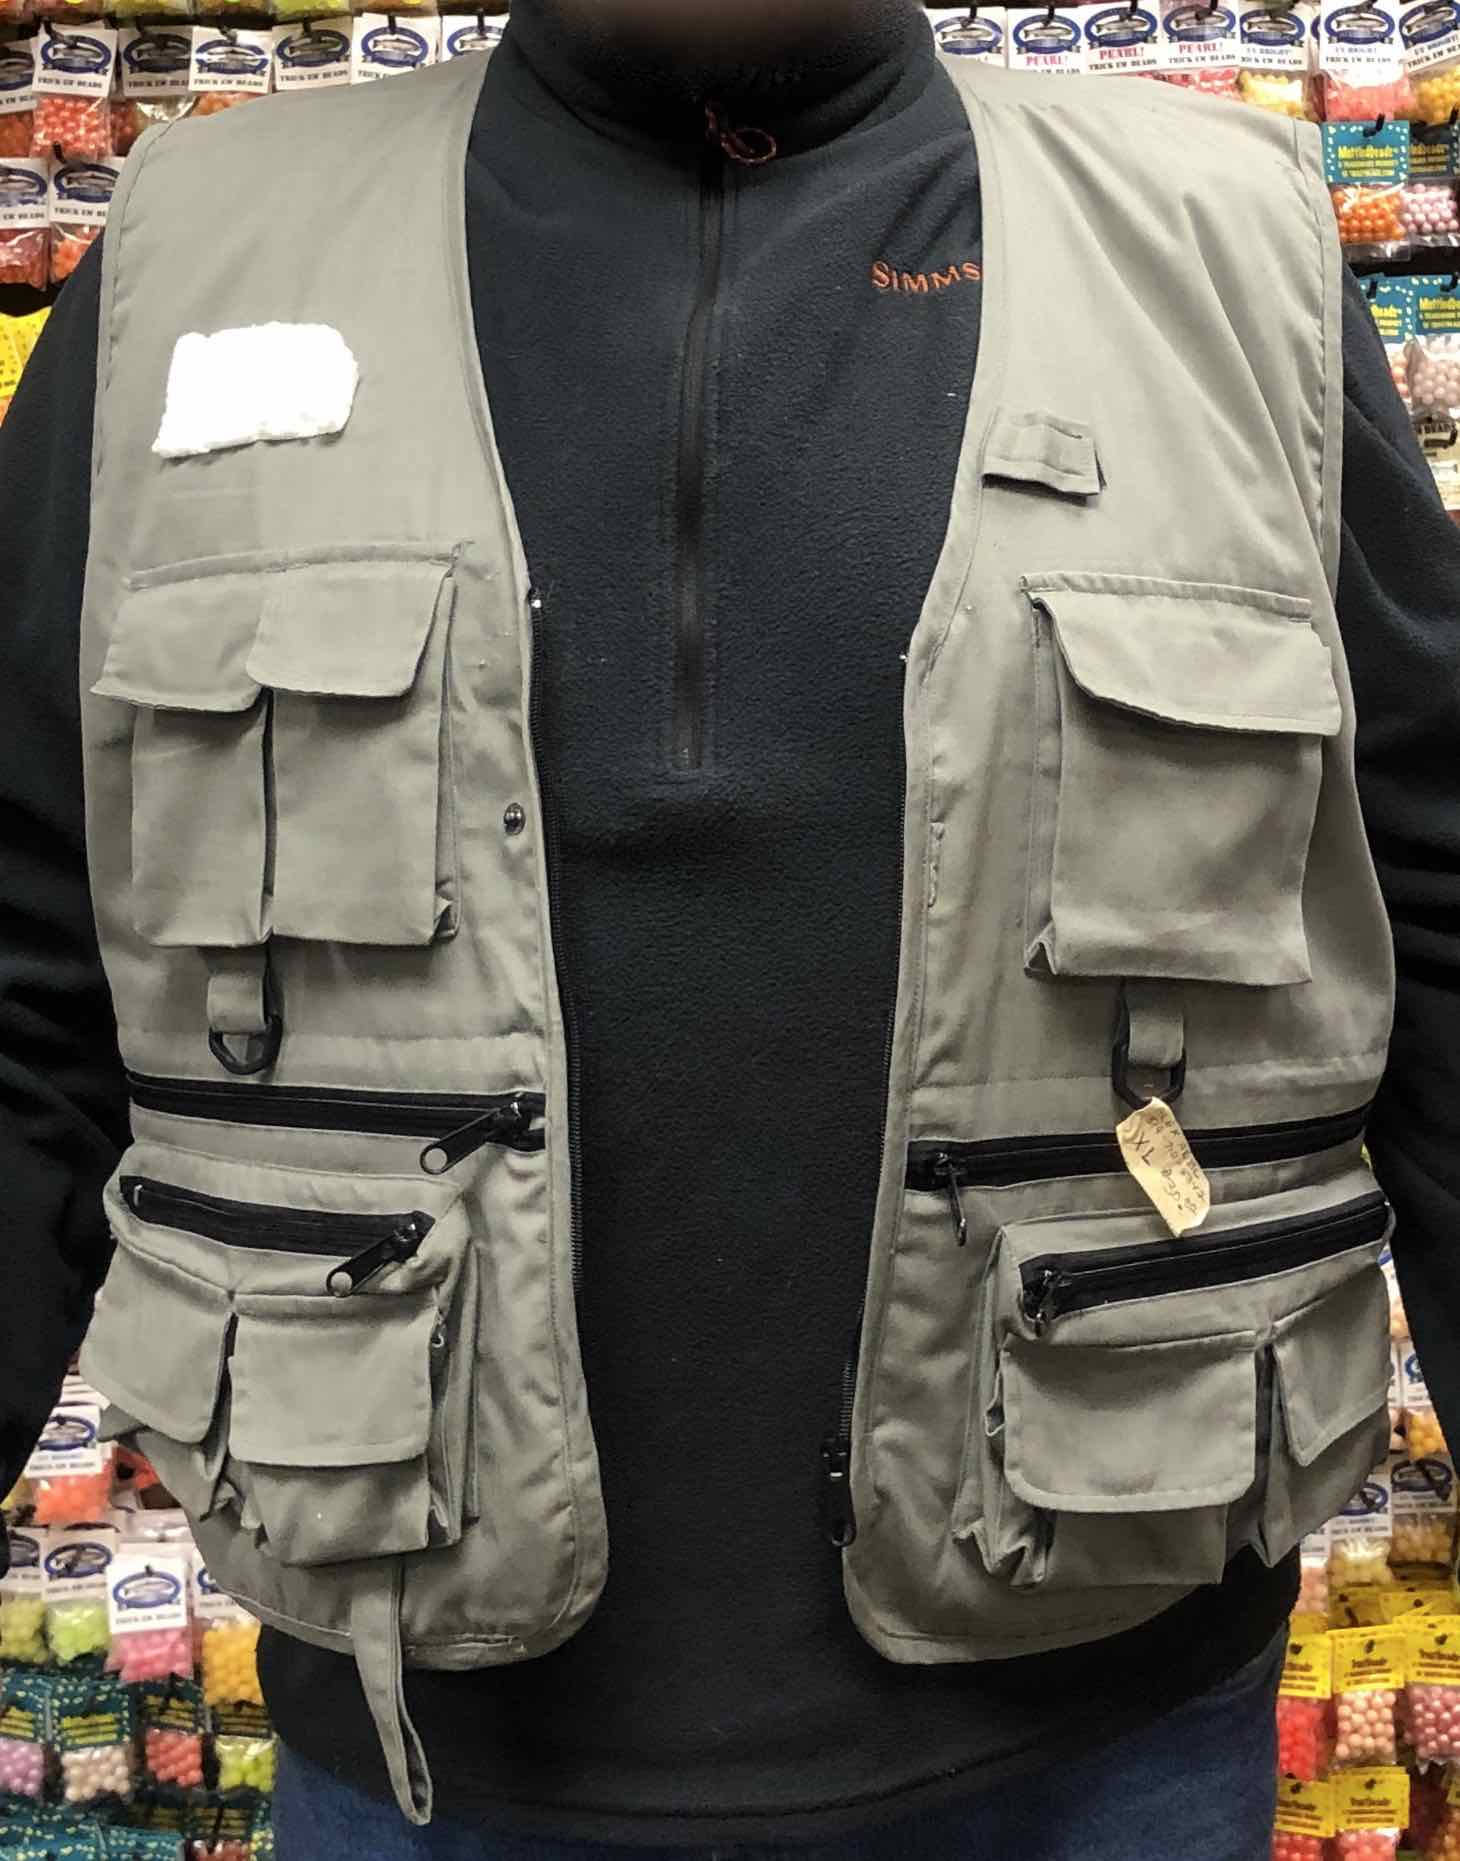 Fishpond Steelhead Vest - Size XL - GREAT SHAPE! - $30